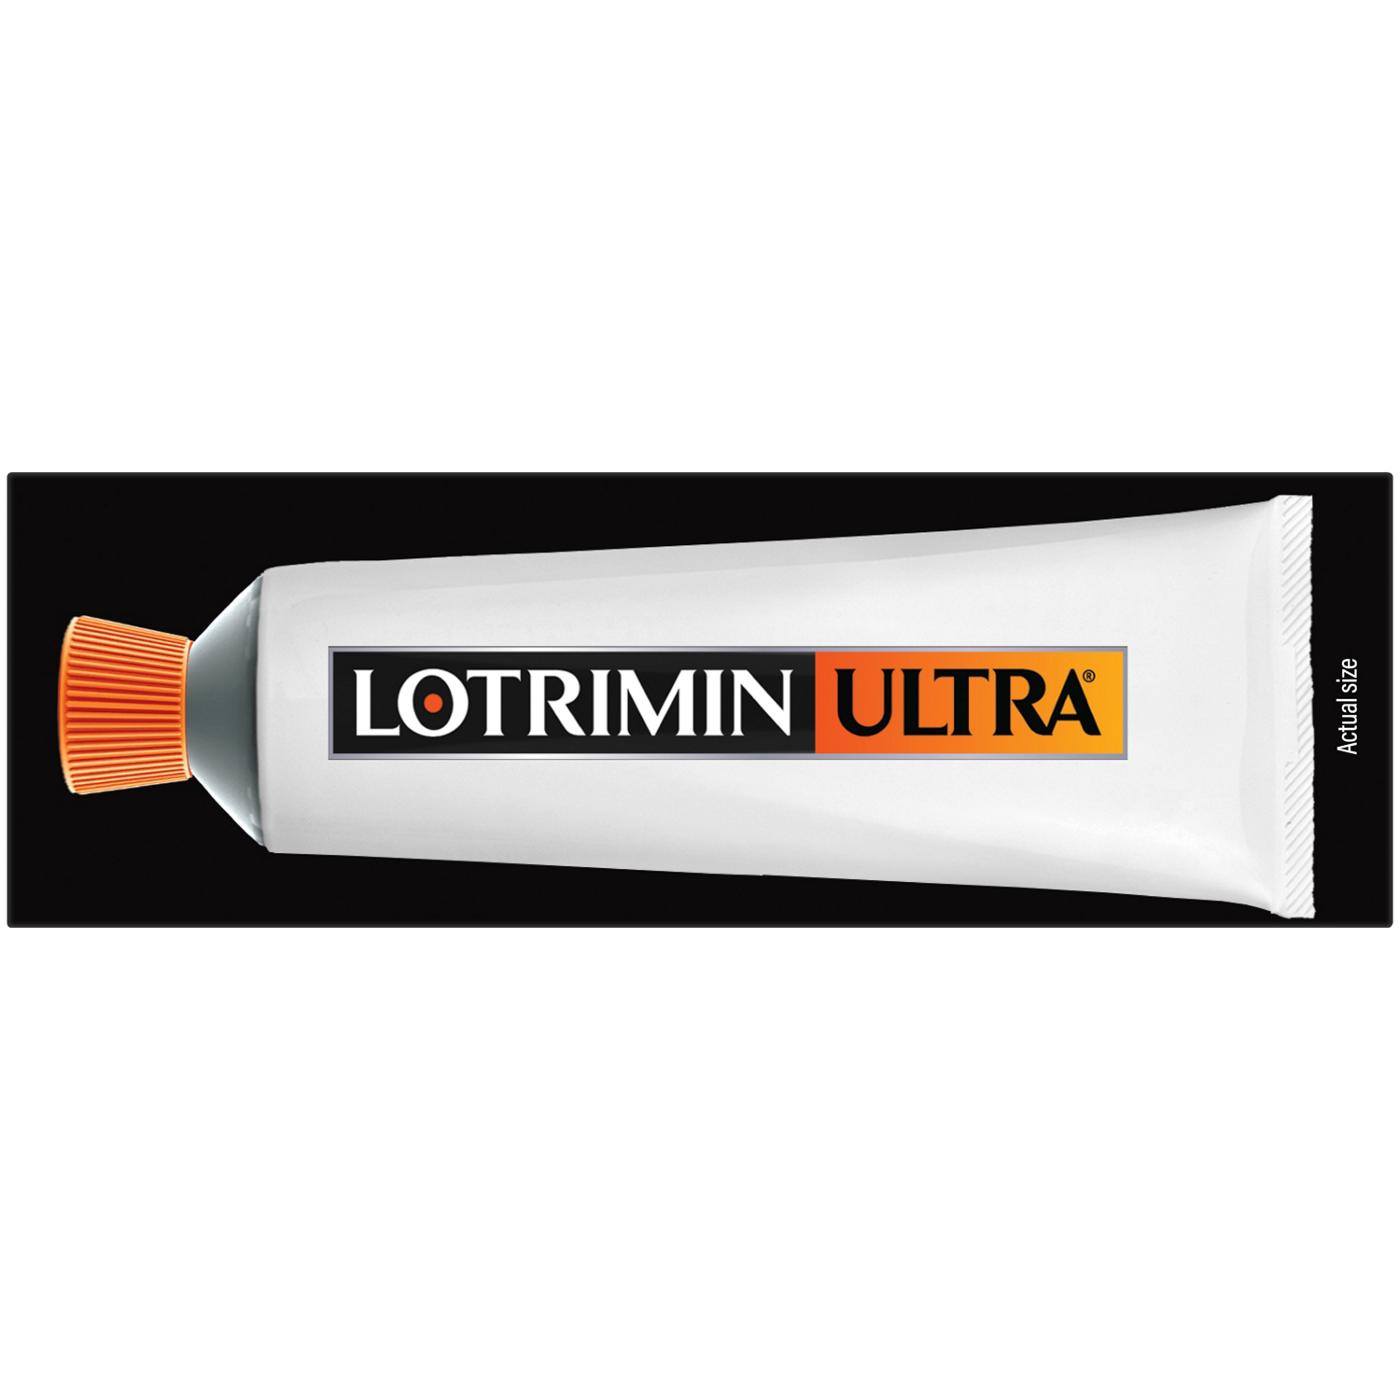 Lotrimin Ultra Prescription Strength Antifungal Cream; image 4 of 7